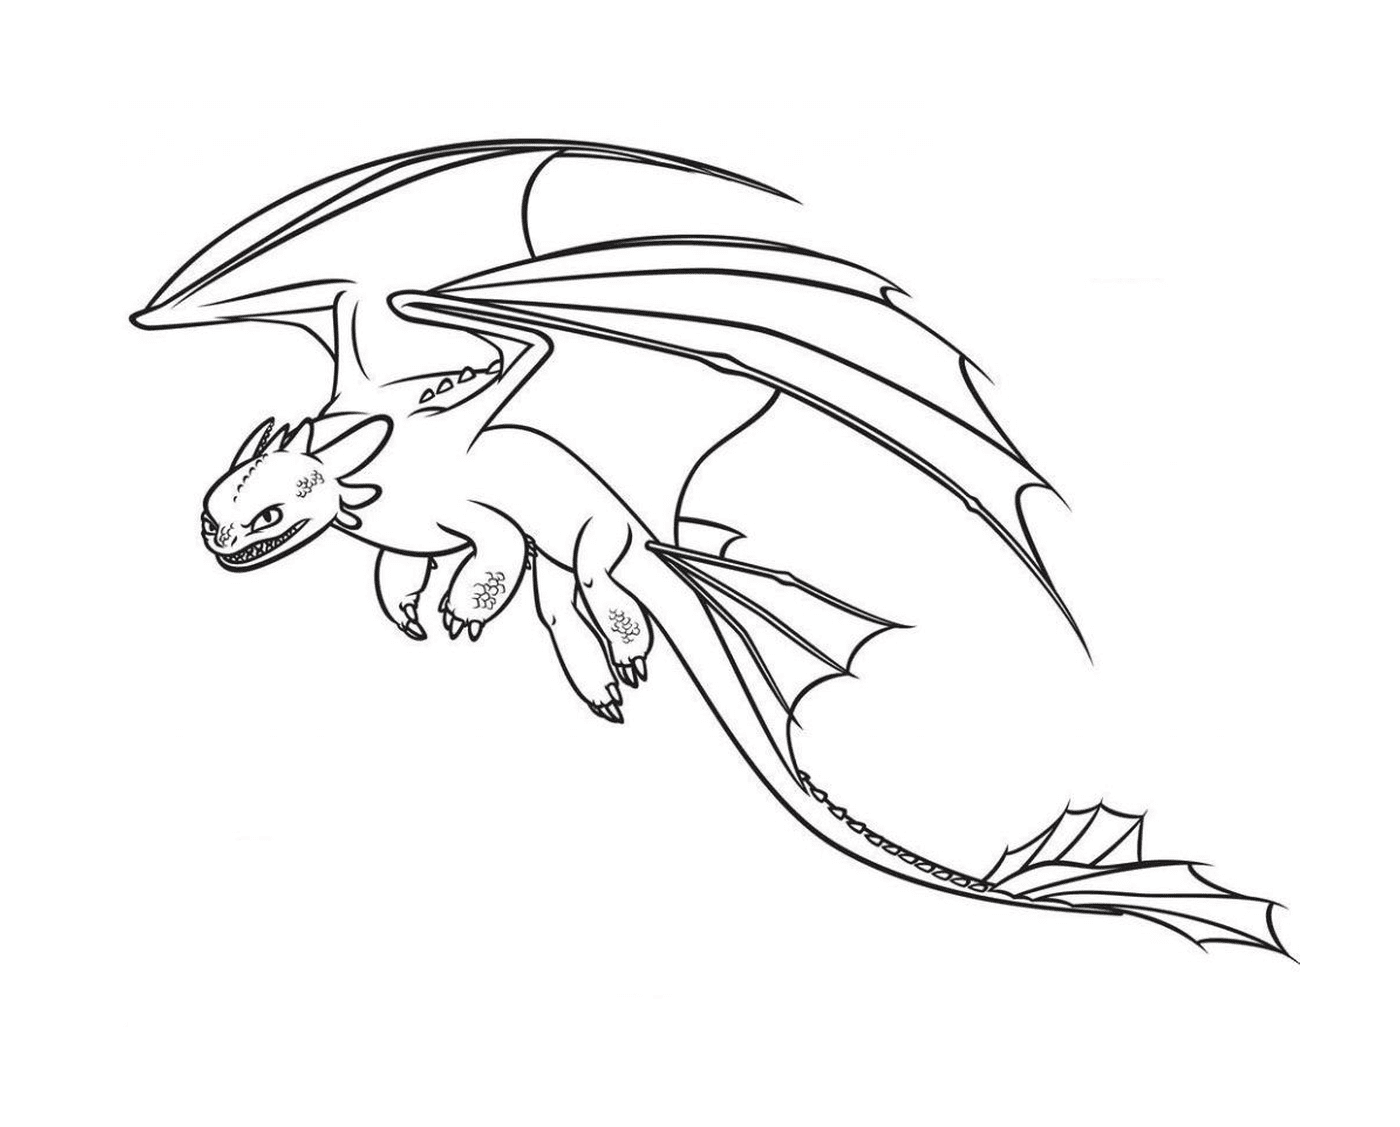  Беззубик, самый быстрый дракон 